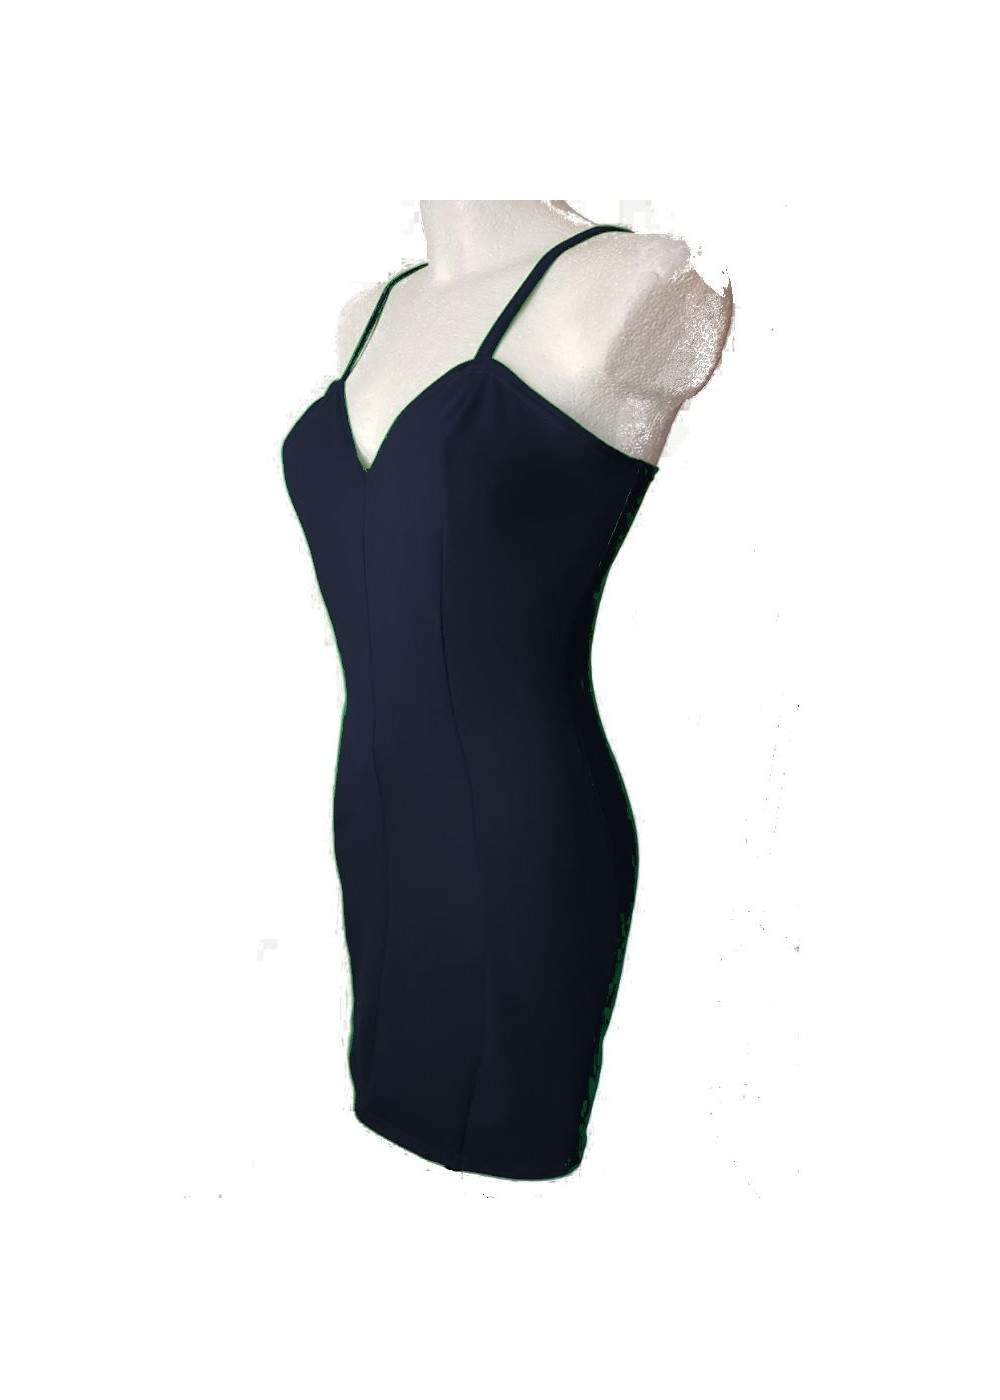 Blue Stretch Cotton Strap Dress CockTeildress Sizes 34 - 52 35,00 € - 